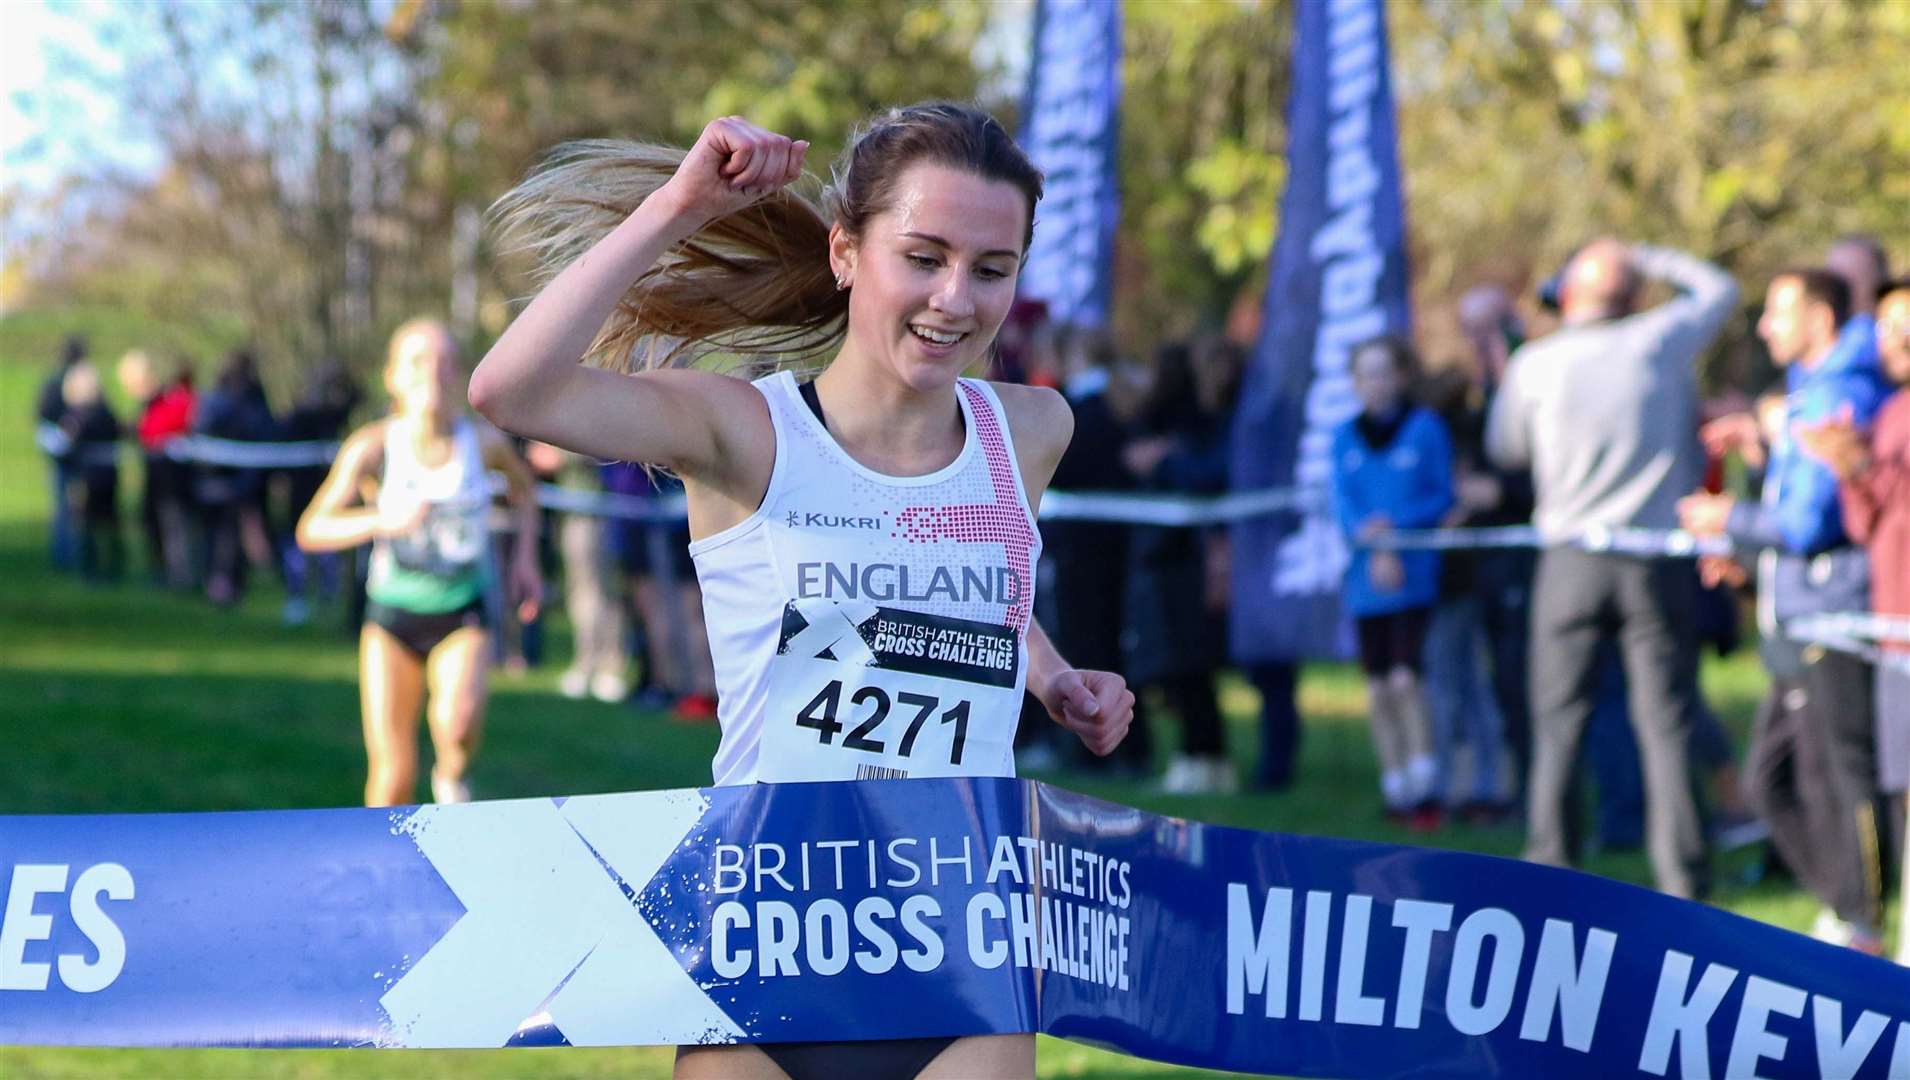 Alex Millard of Invicta East Kent on her way to victory at the British Athletics Cross Challenge